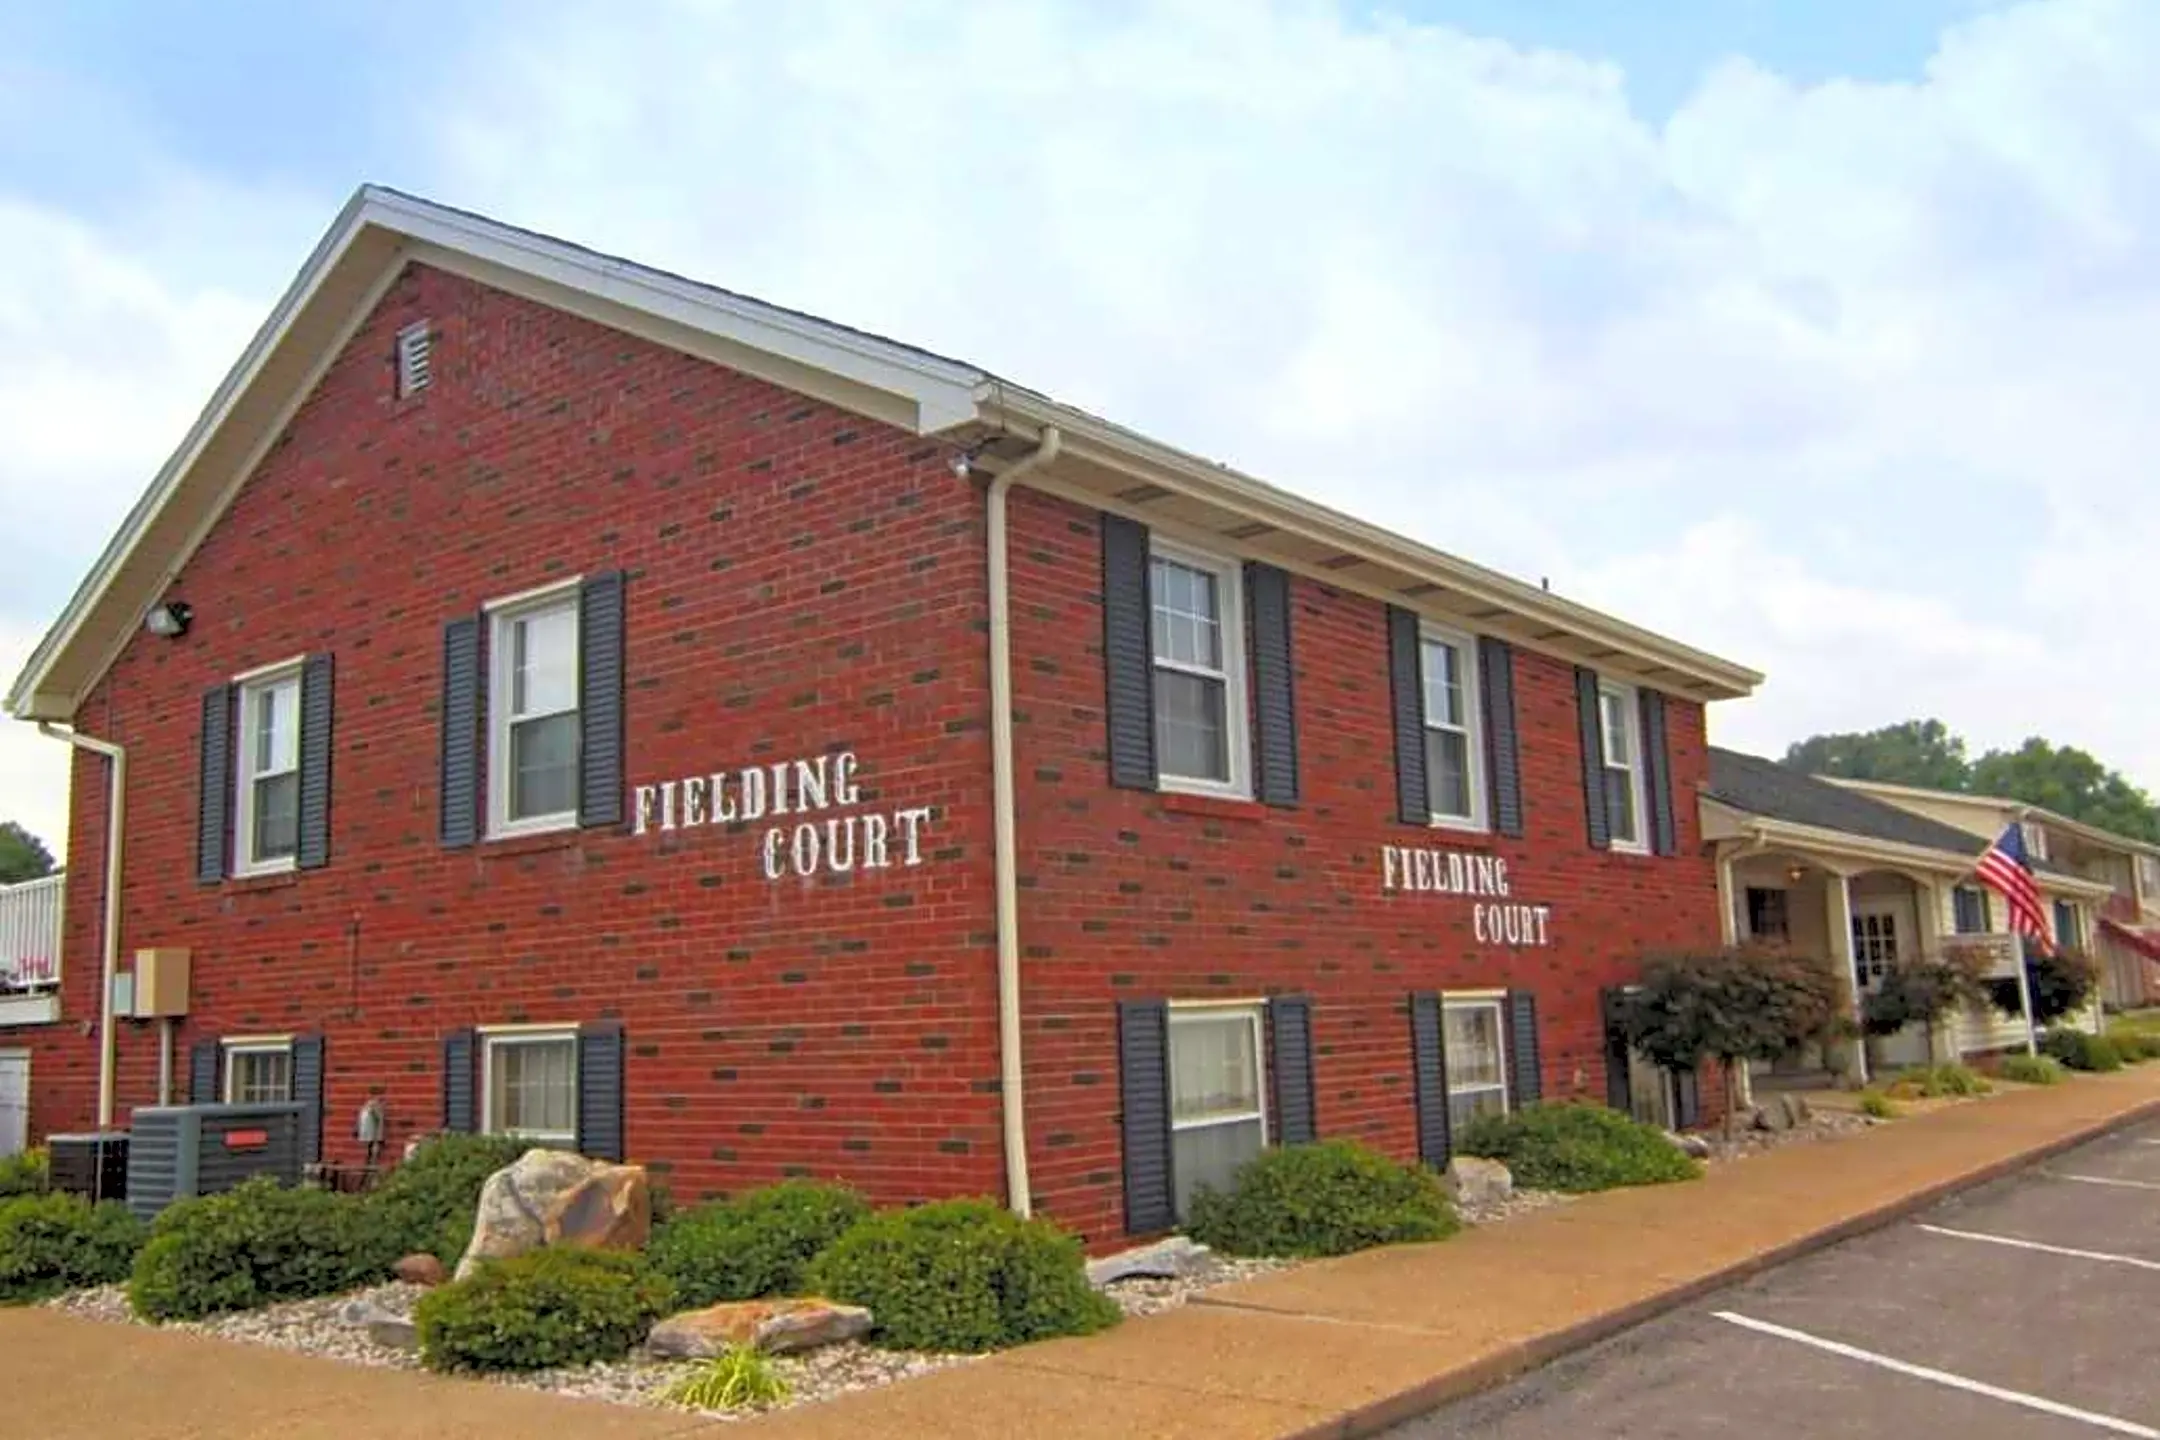 Building - Fielding Court - Evansville, IN